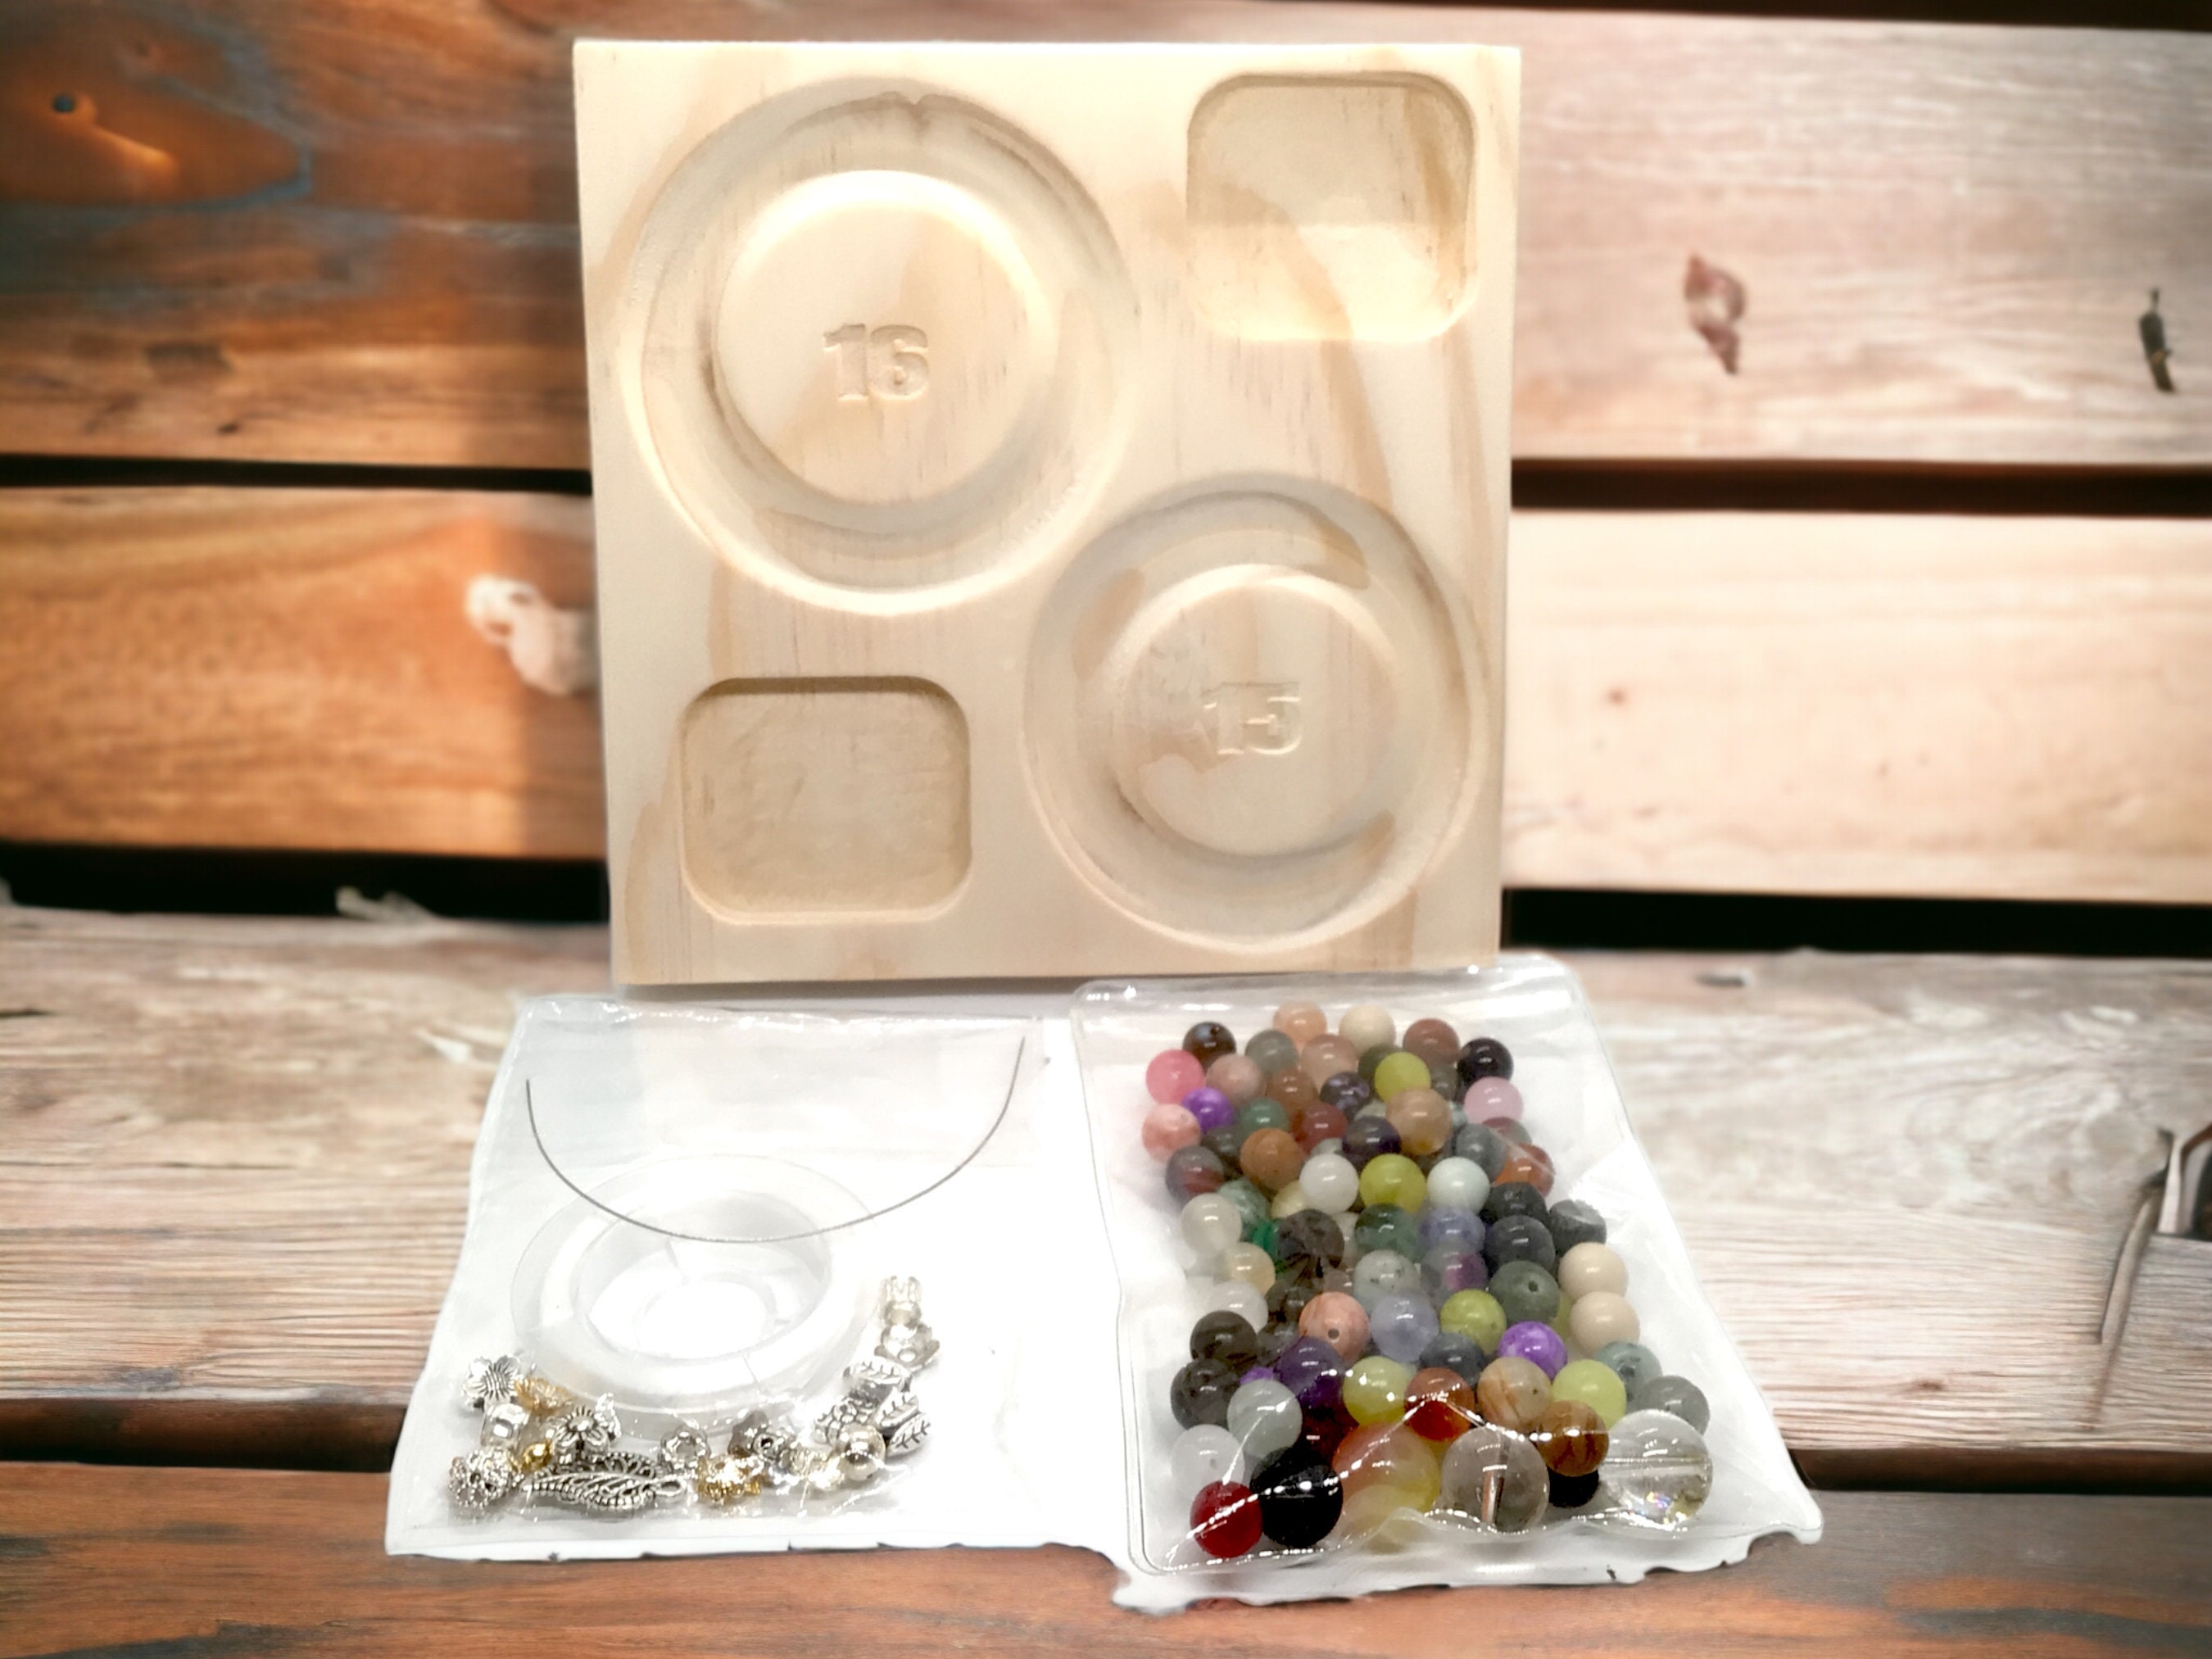 Jewelry Making Starter Kit Jewelry Making Supplies Crystal Chip Beads  Jewelry Making Gemstones Kit Beading Making Kit Beads Wire Starter 